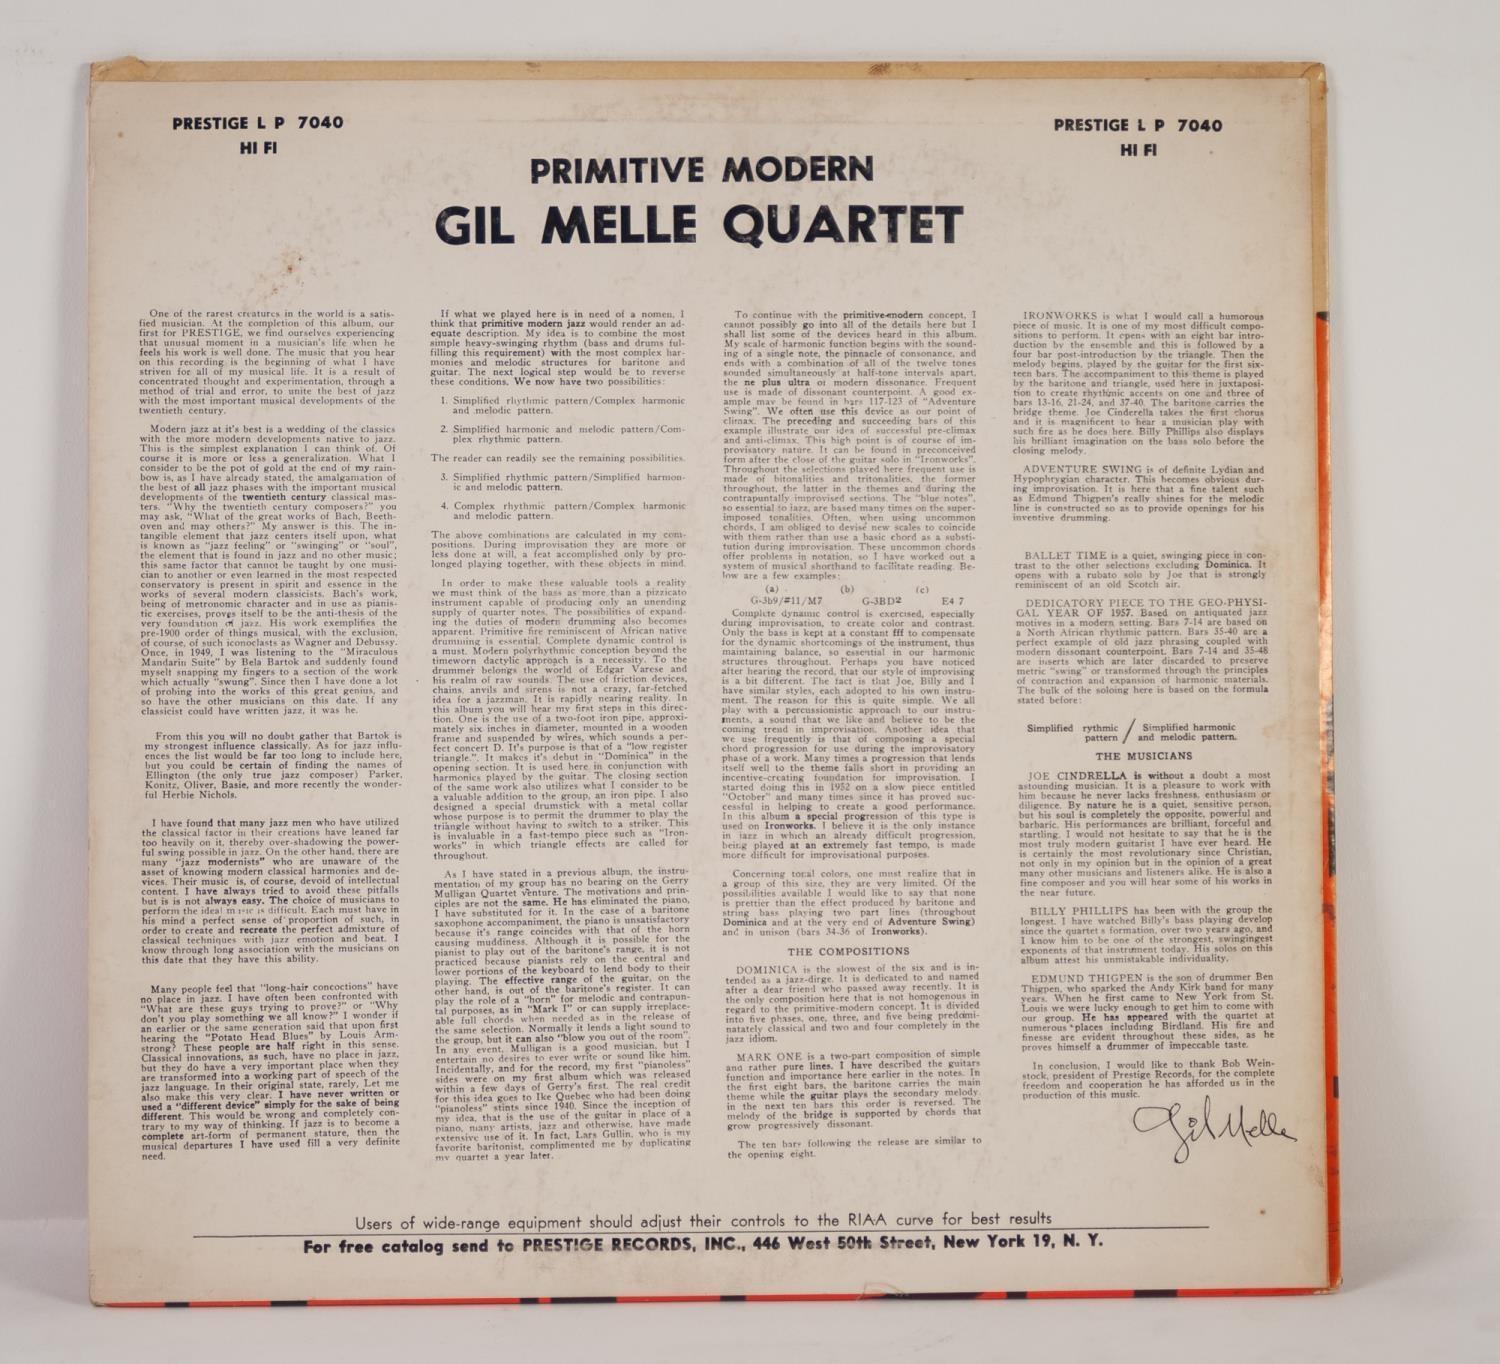 JAZZ, VINYL RECORDS- M IS FOR GIL MELLE-PLAYS PRIMITIVE MODERN, Prestige (LP 7040). Original US, - Image 2 of 4